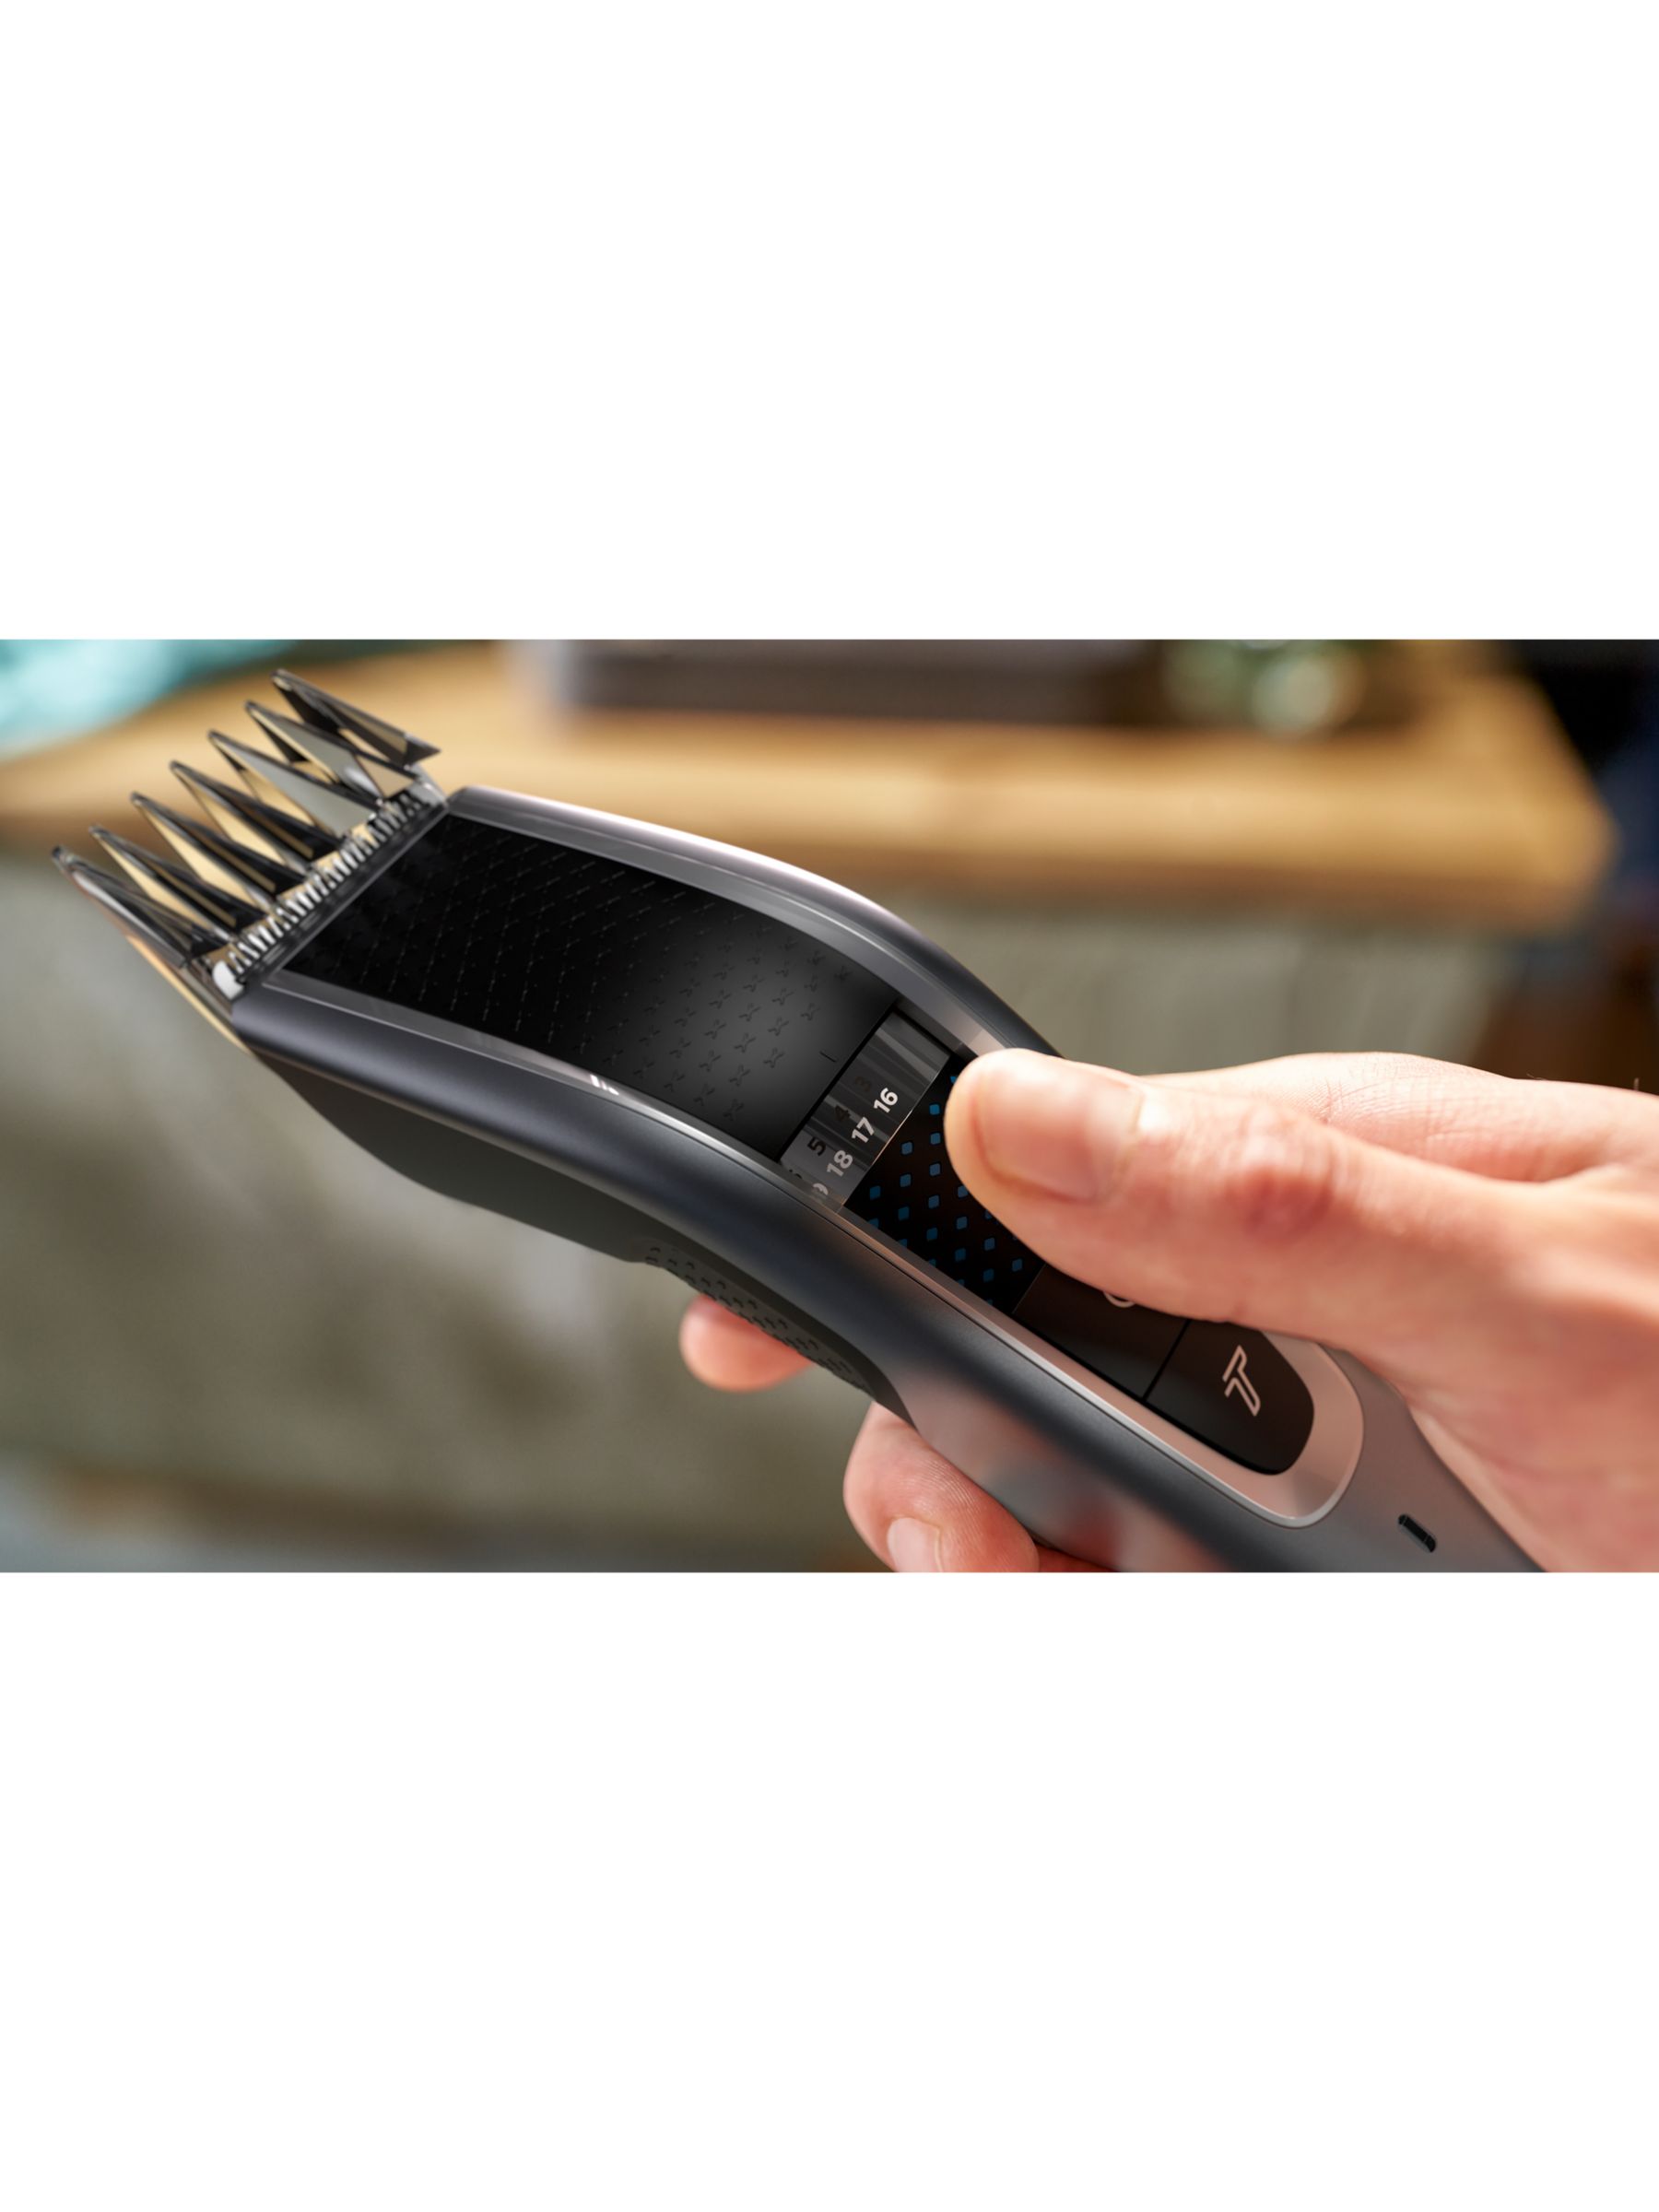 philips hair clipper trimmer